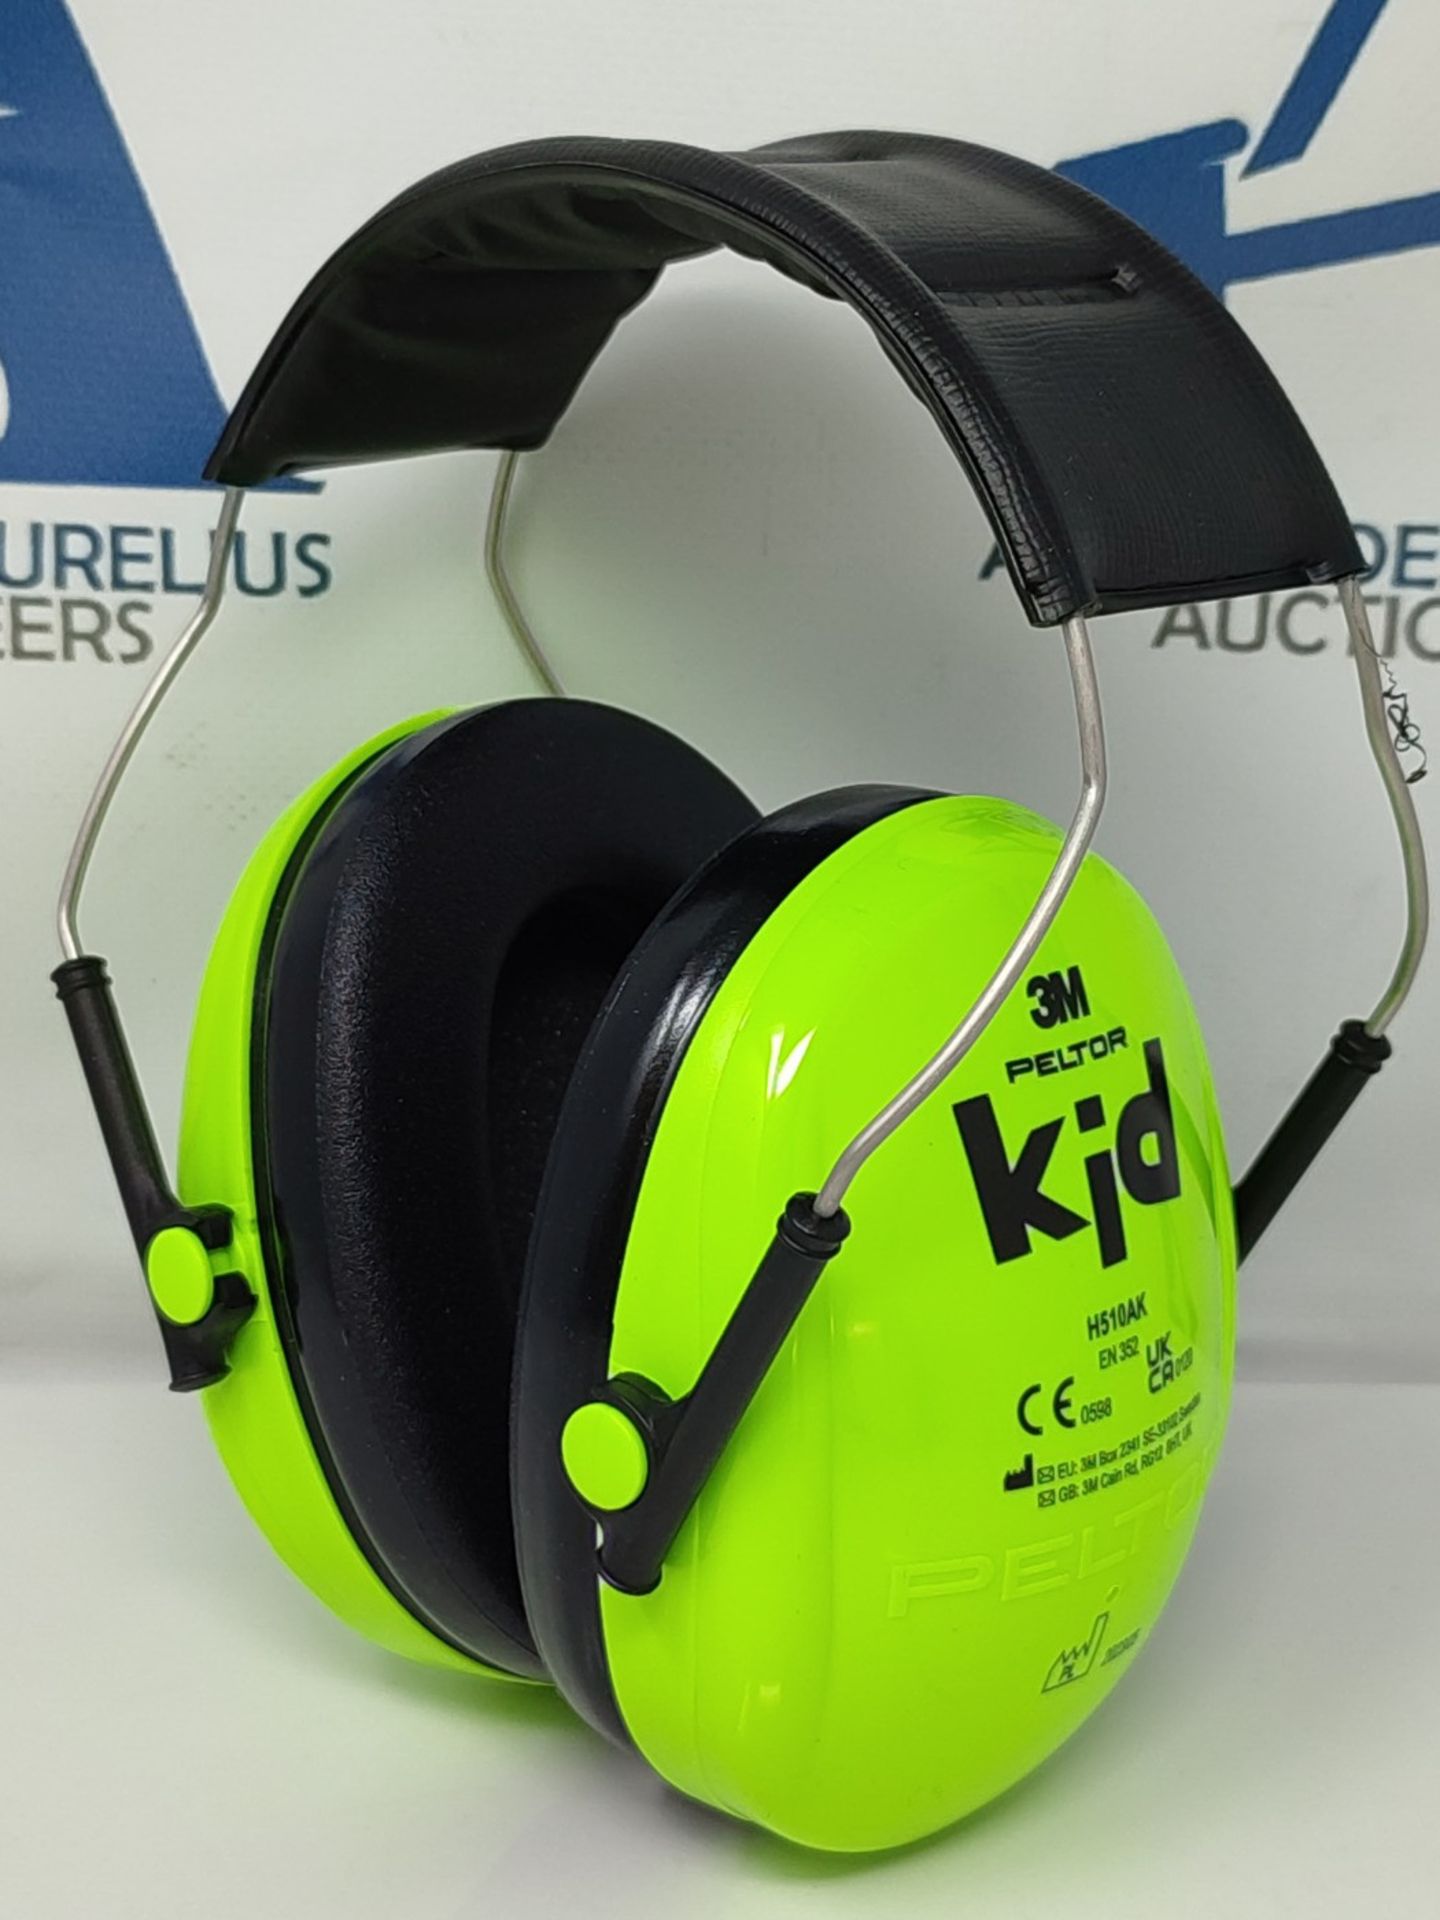 3M Peltor Kid Ear Defender Children H510AK, neon green, Child Hearing Protection / Ear - Image 2 of 2